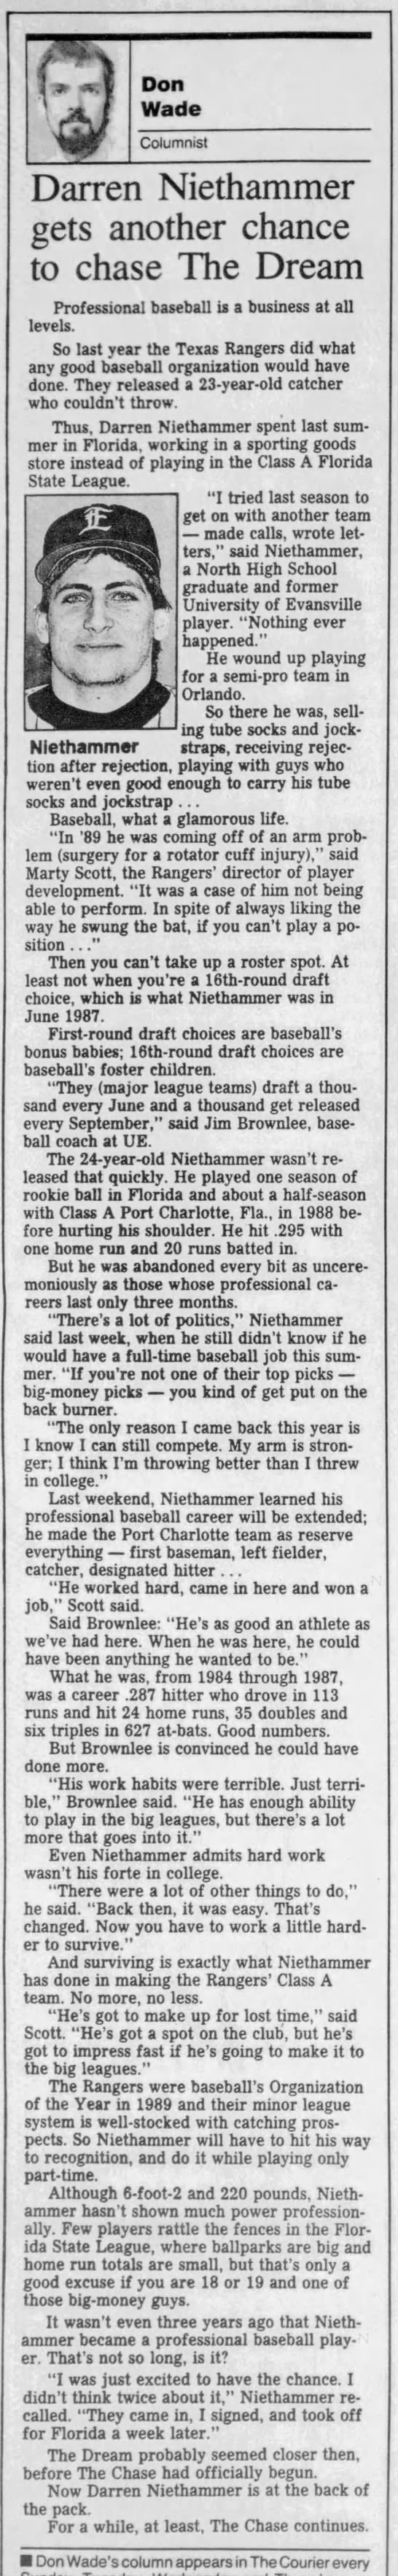 Darren Niethammer - April 3, 1990 - Greatest21Days.com - 